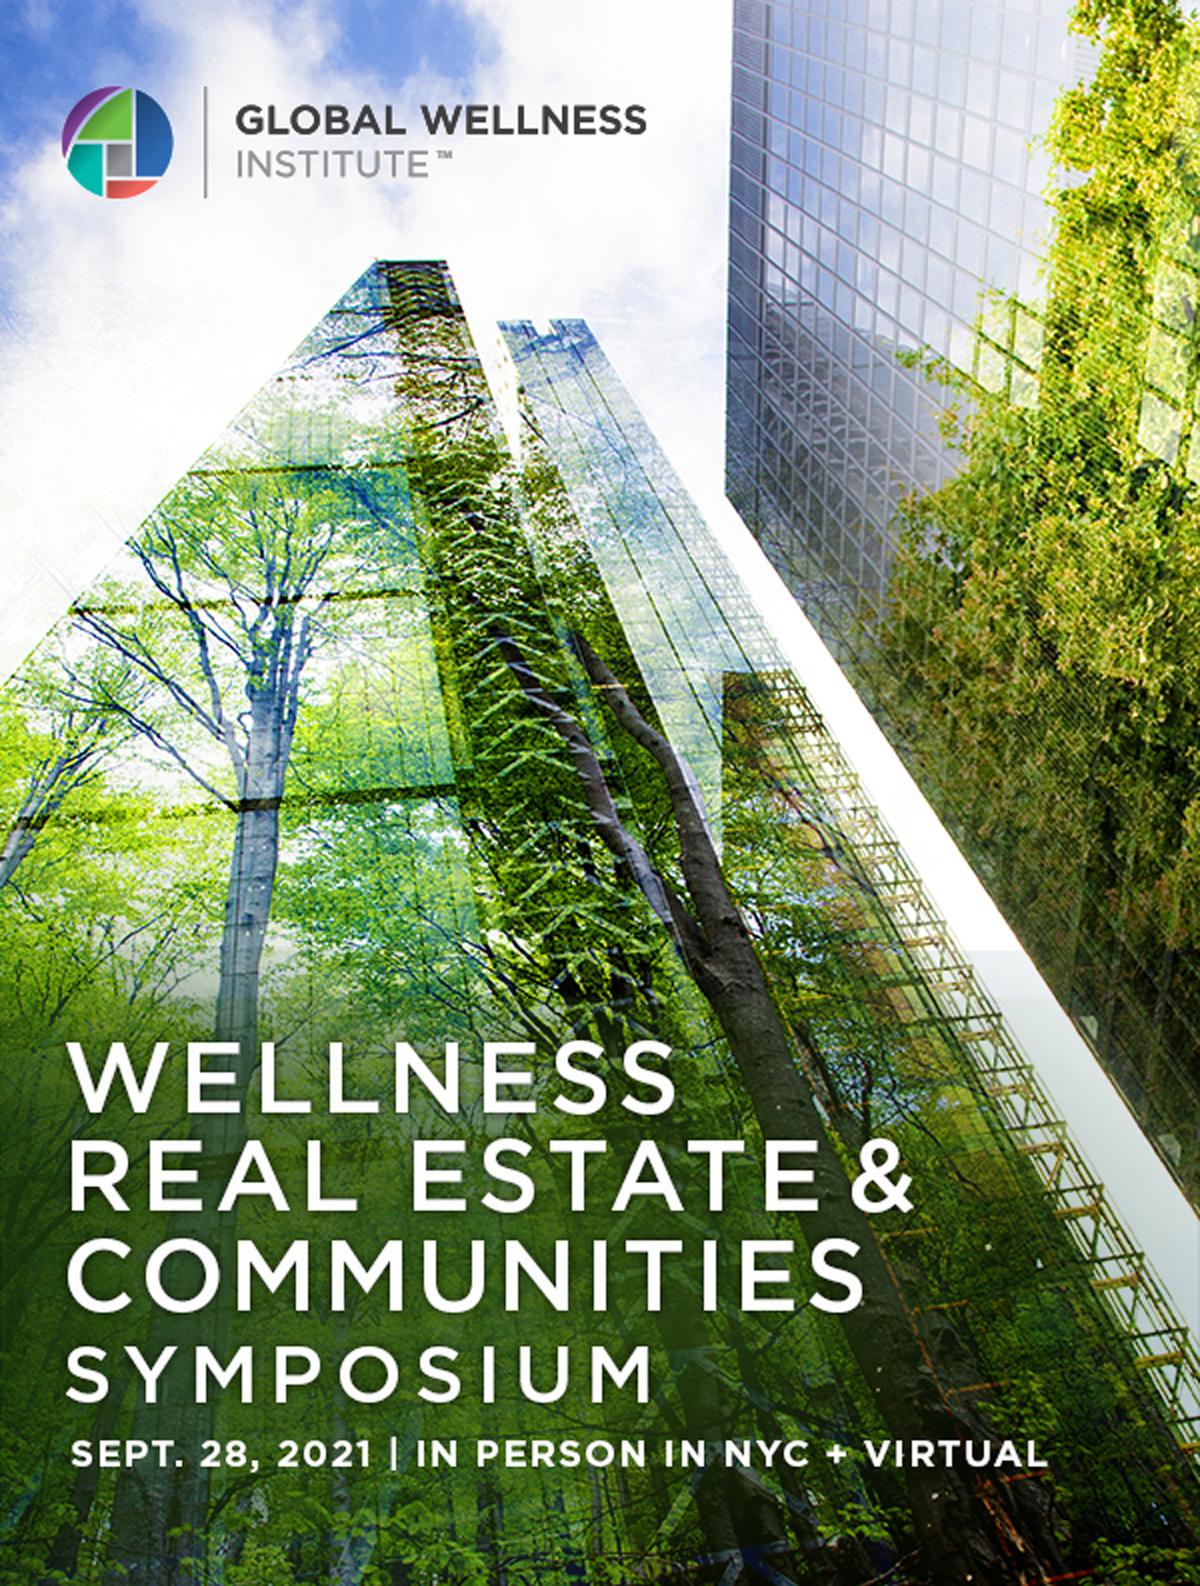 Global Wellness Institute to hold inaugural Wellness Real Estate